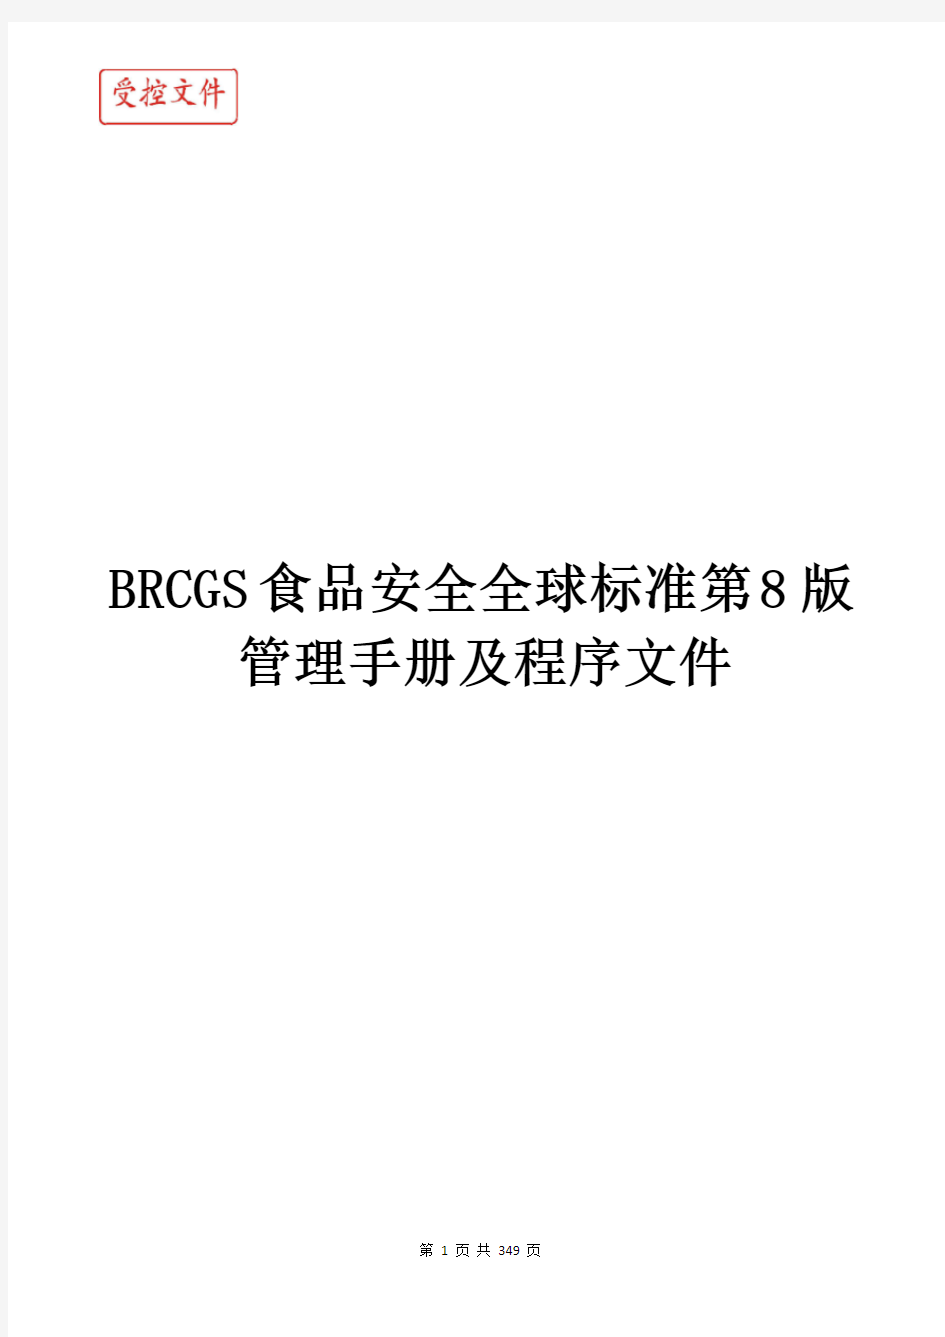 BRCGS食品安全全球标准第8版管理手册及程序文件